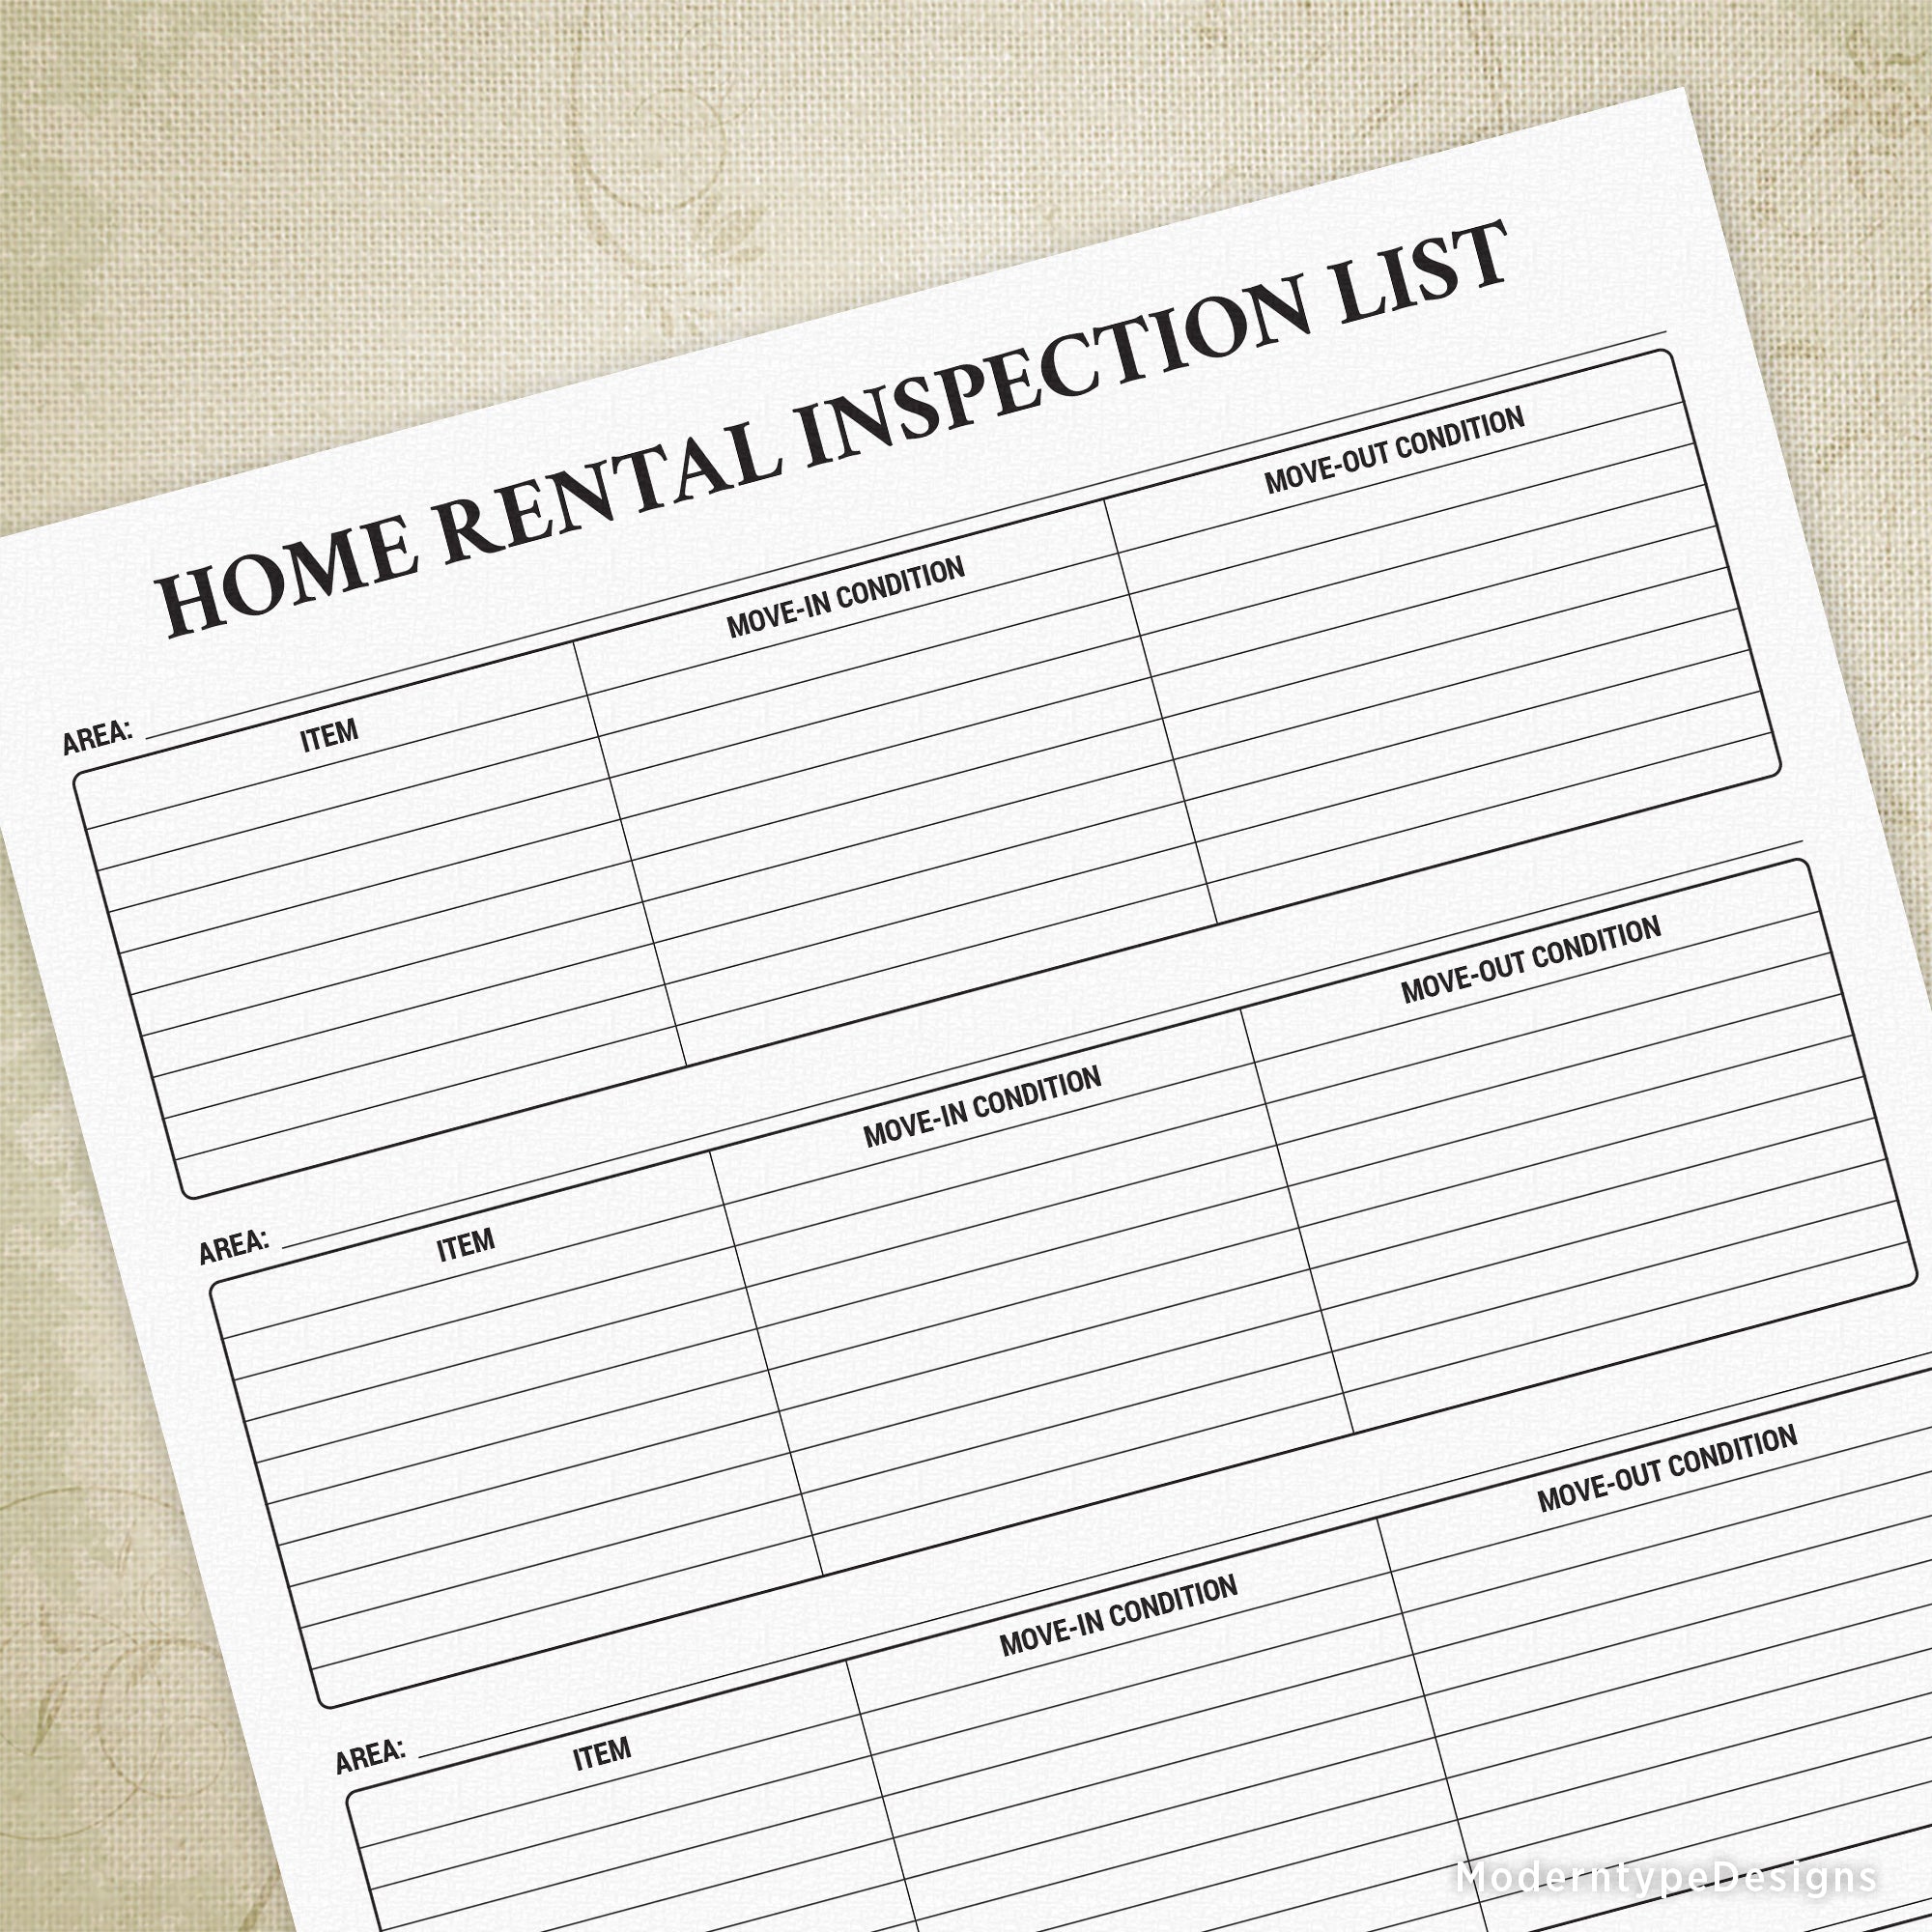 Home Rental Inspection List Printable